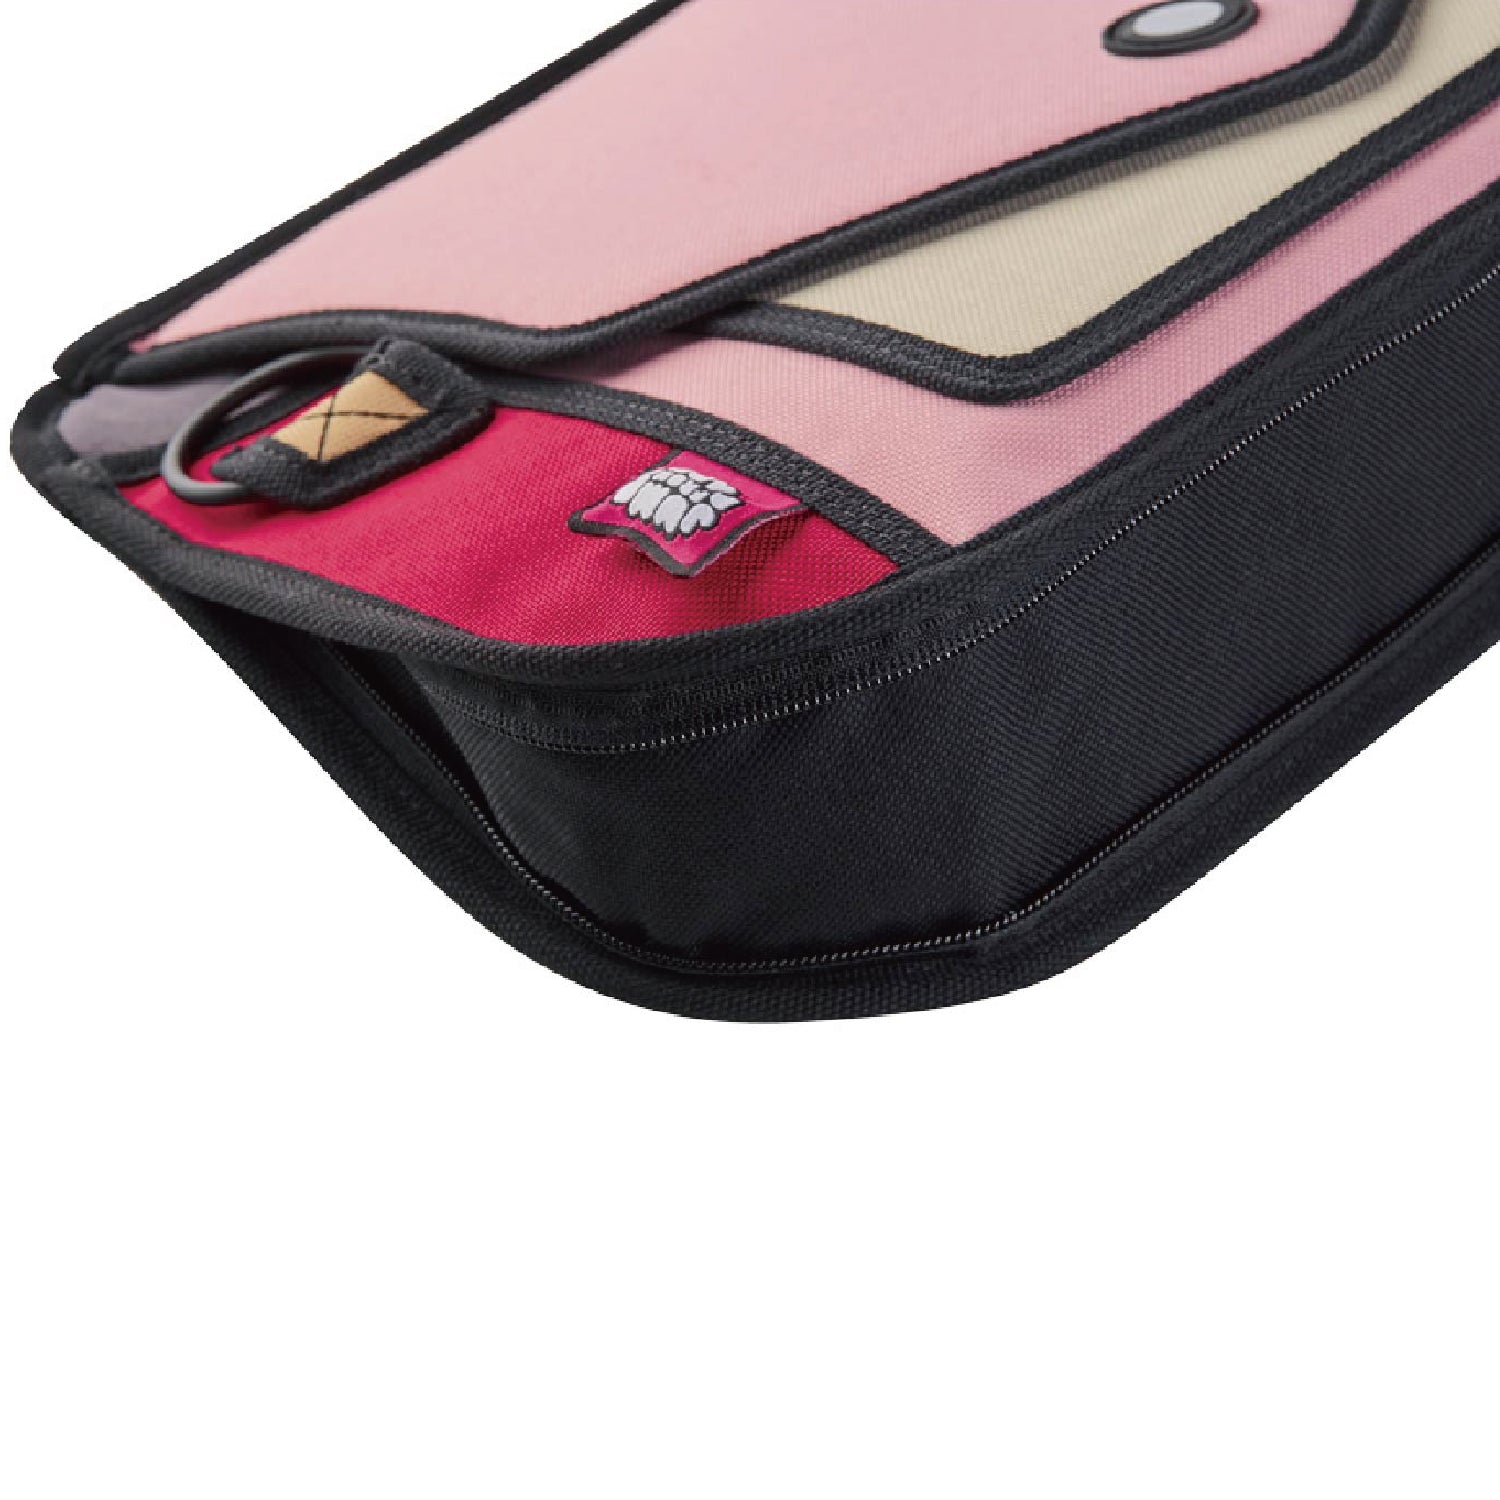 Giggle Coo Coo Pink Shoulder Bag - JumpFromPaper